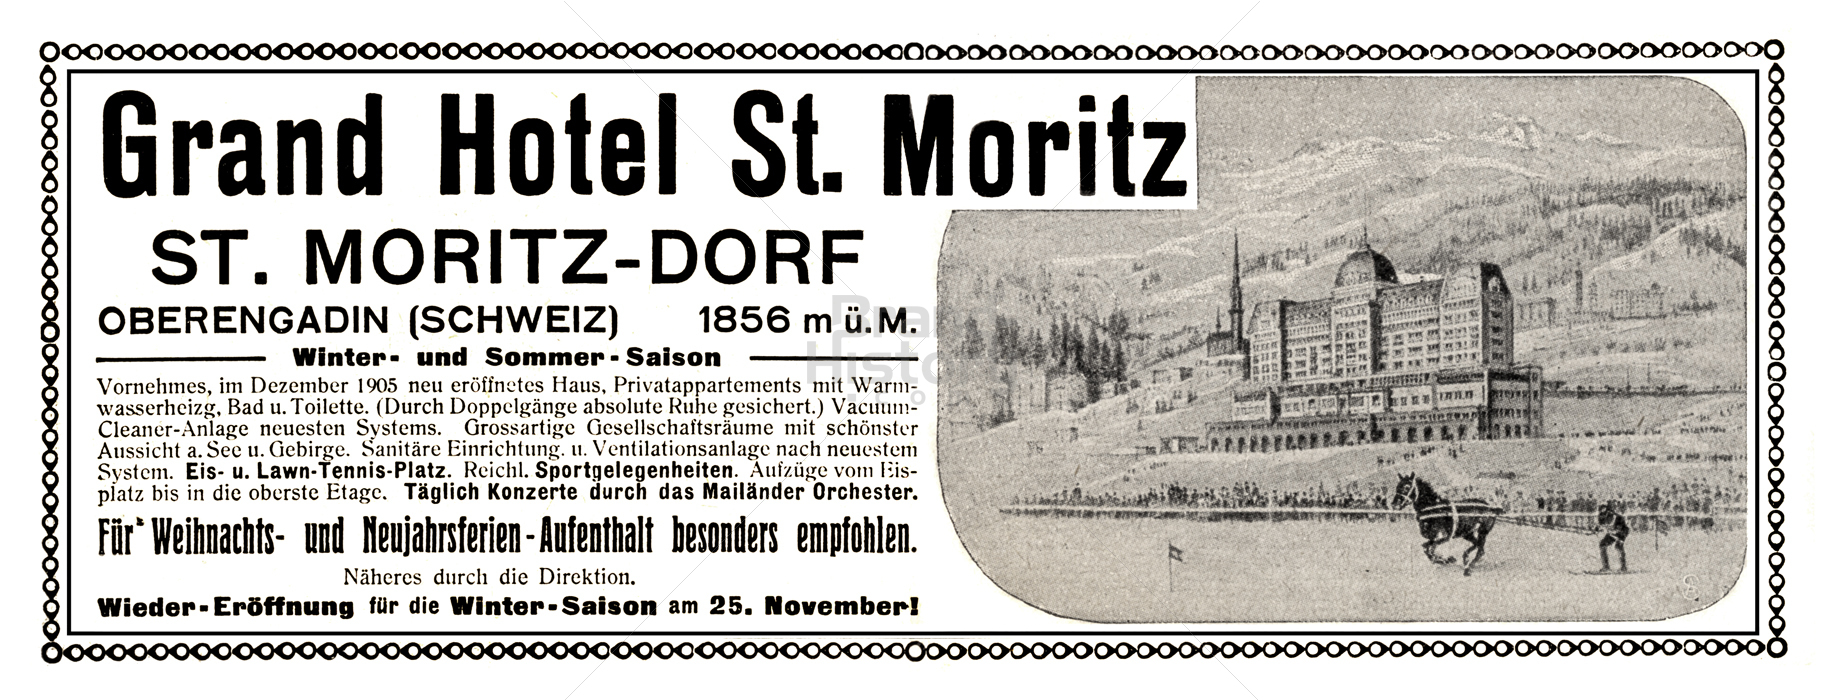 Grand Hotel St Moritz Brand History